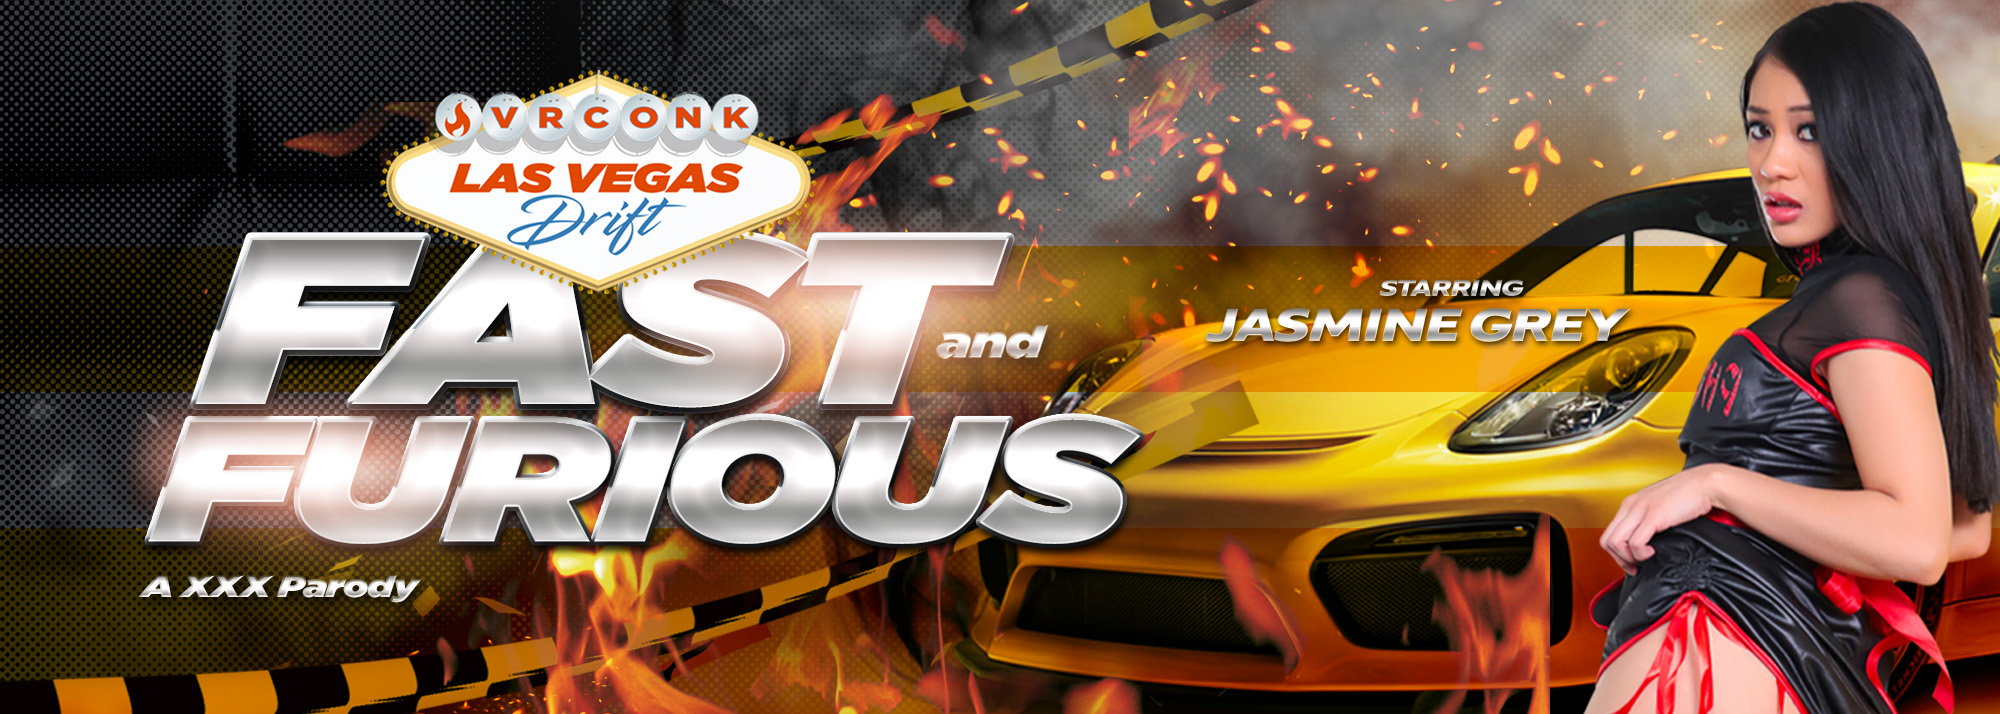 Fast And Furious: Las Vegas Drift (A XXX Parody) - VR Porn Video, Starring: Jasmine Grey VR